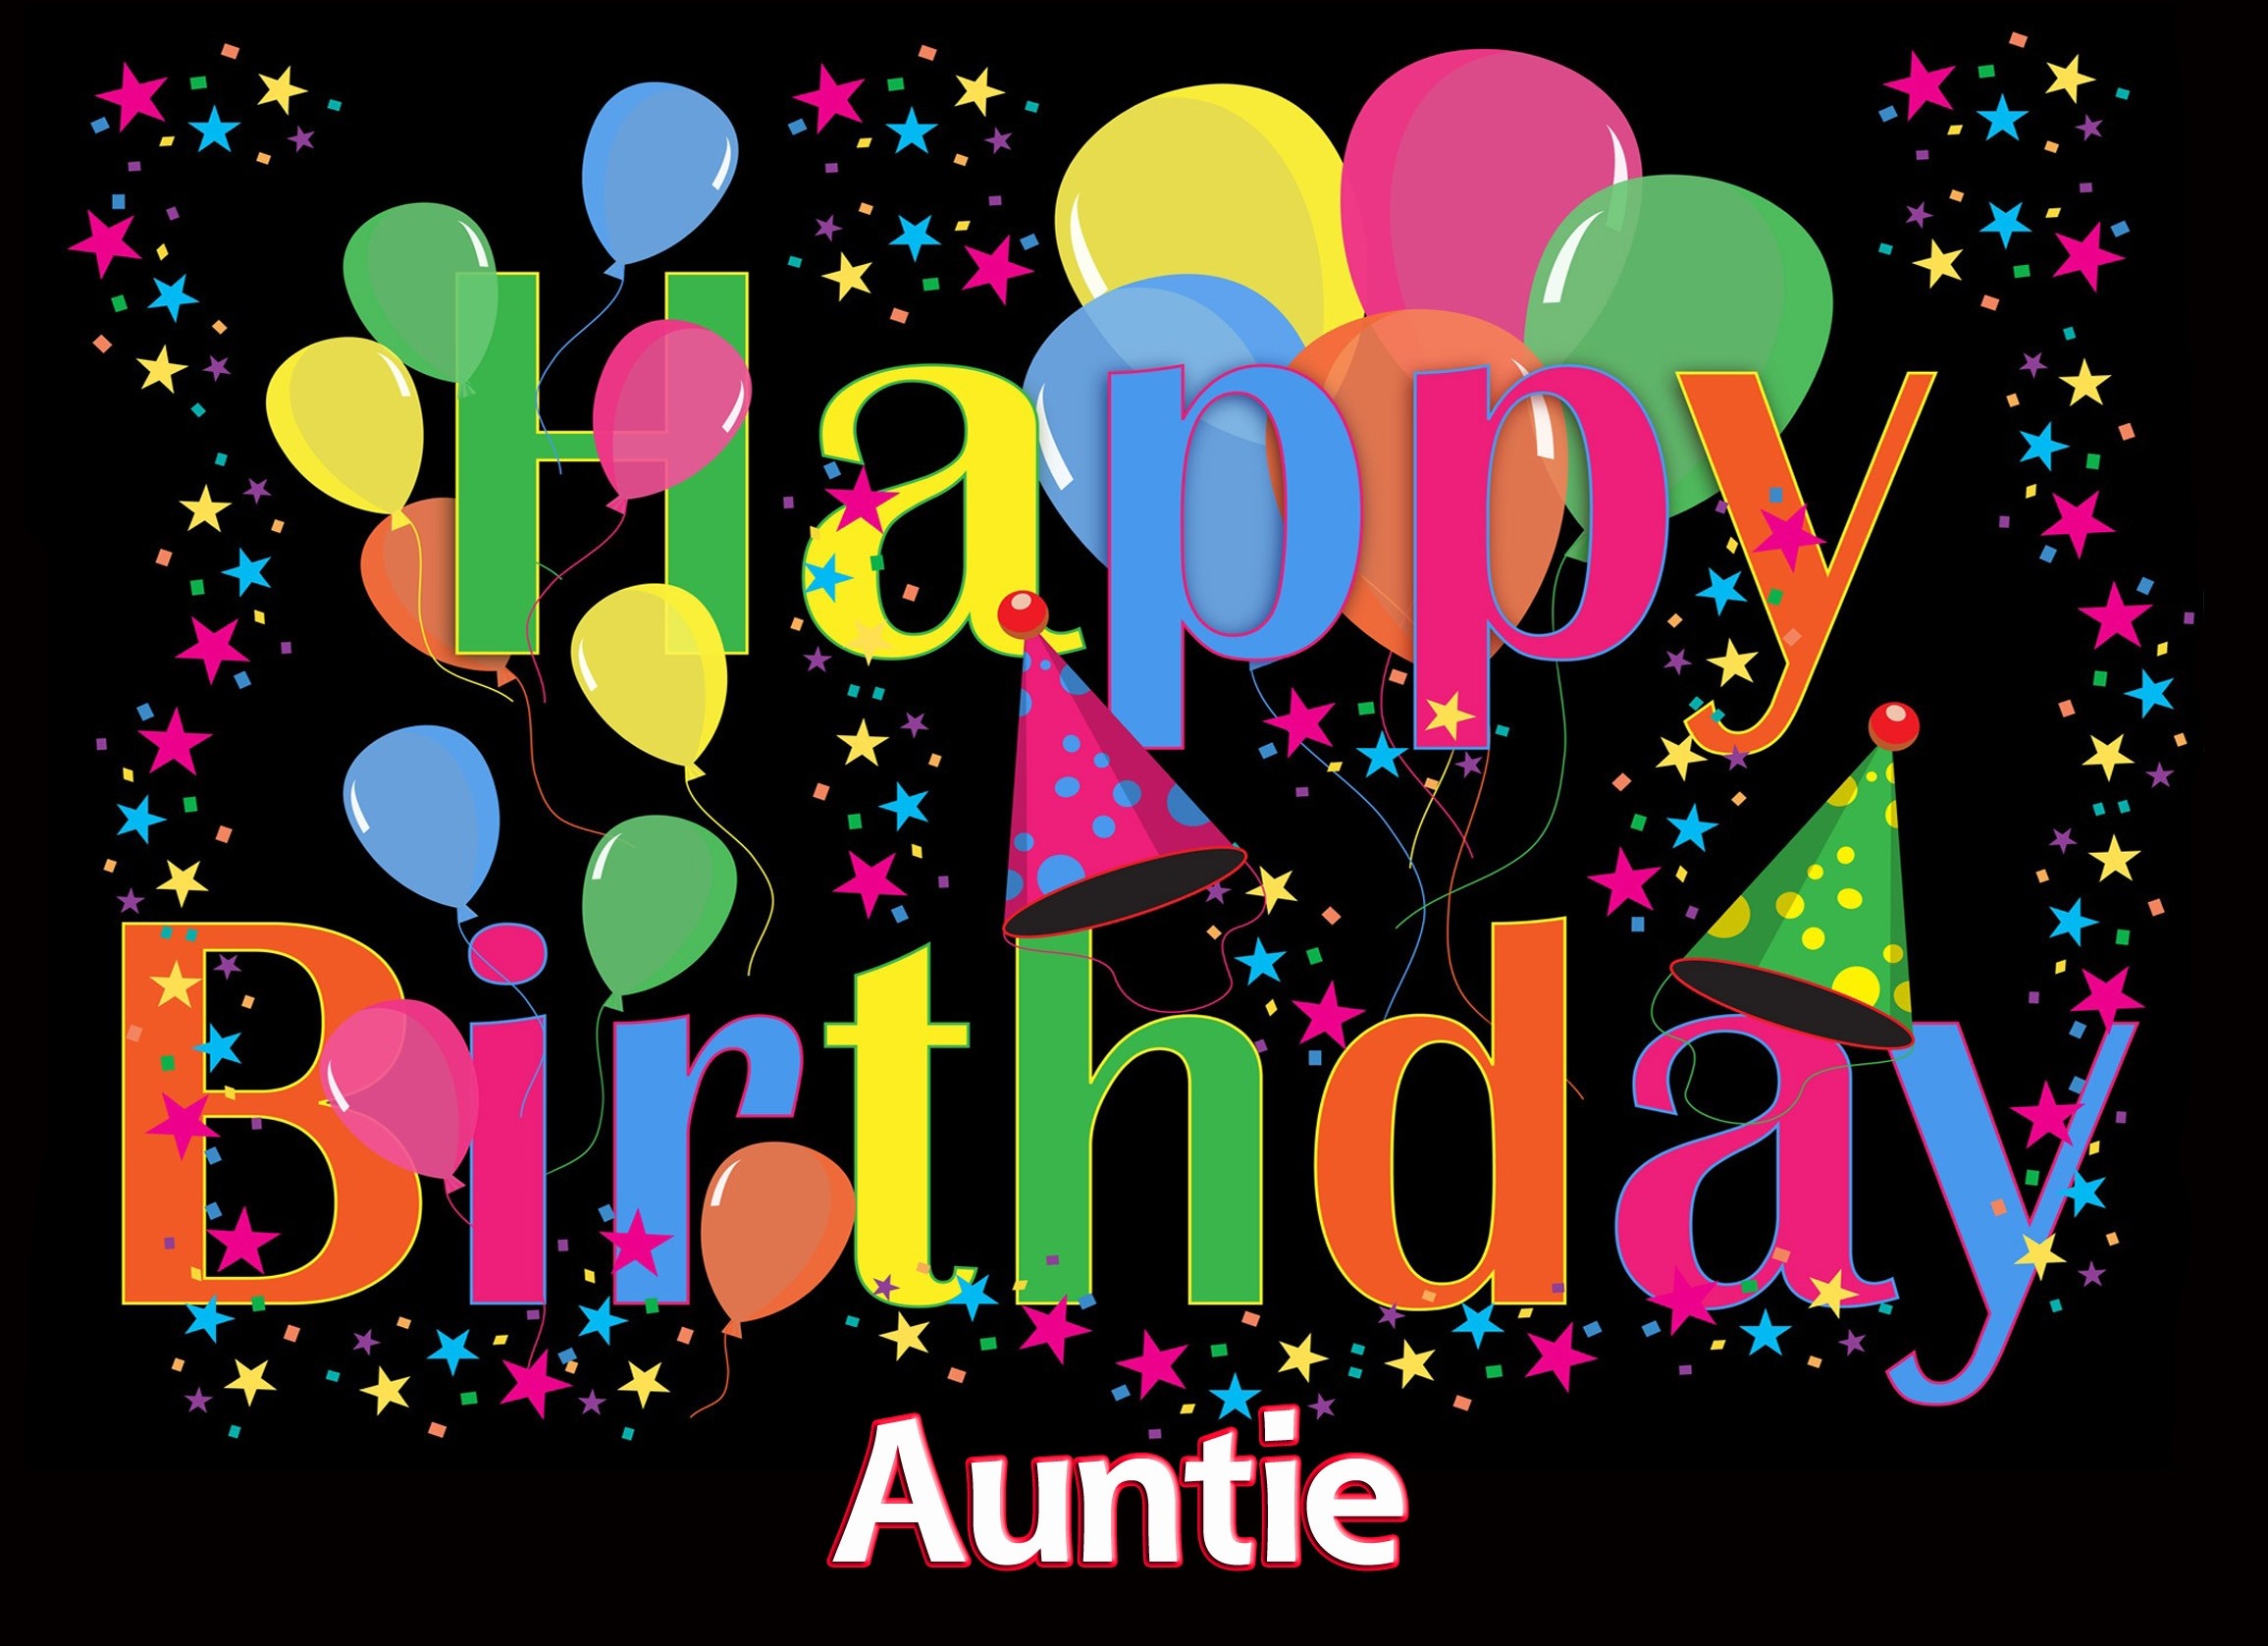 Happy Birthday 'Auntie' Greeting Card